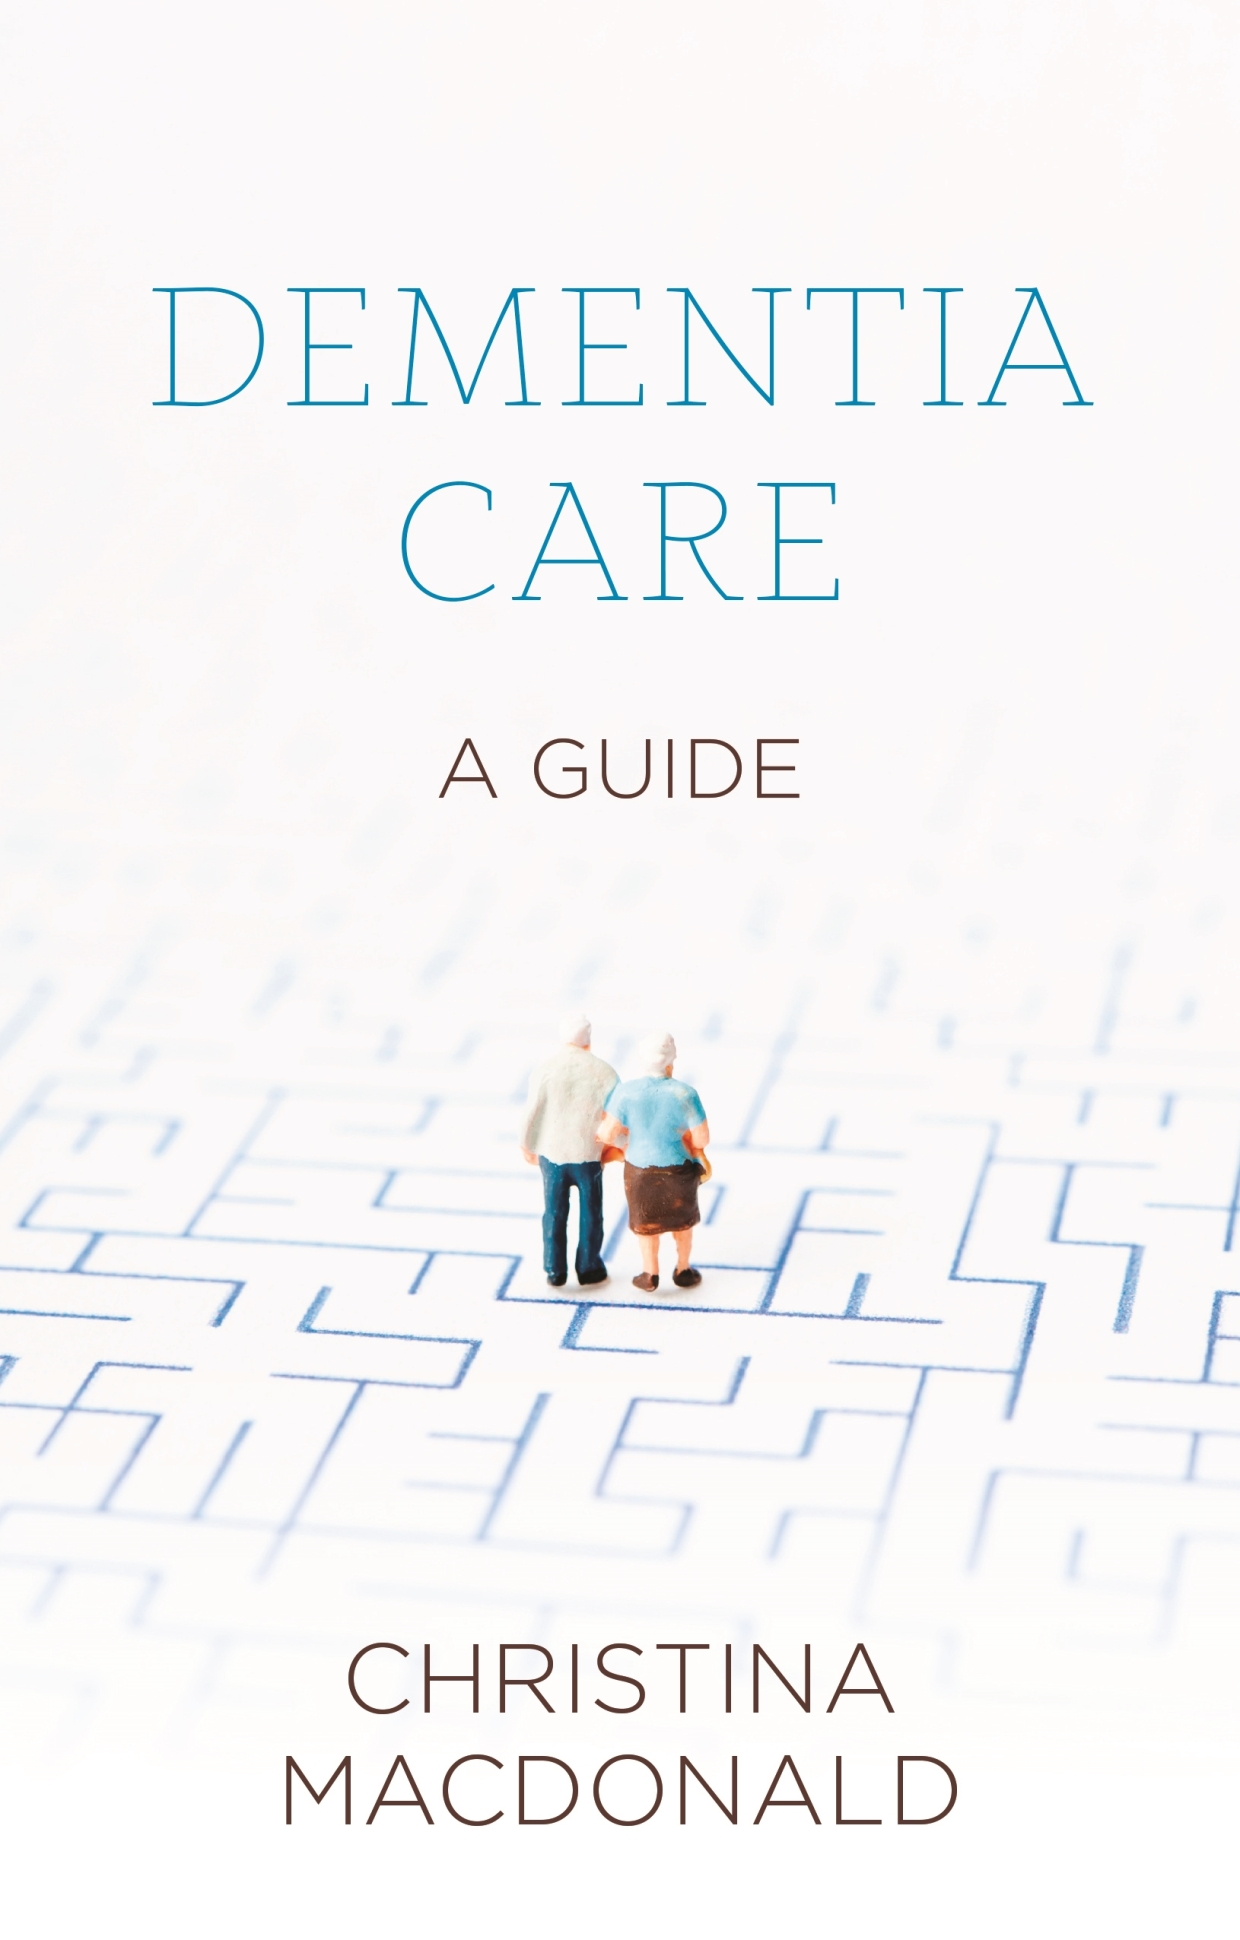 Why should I read ‘Dementia Care: a guide’? – sheldonpress